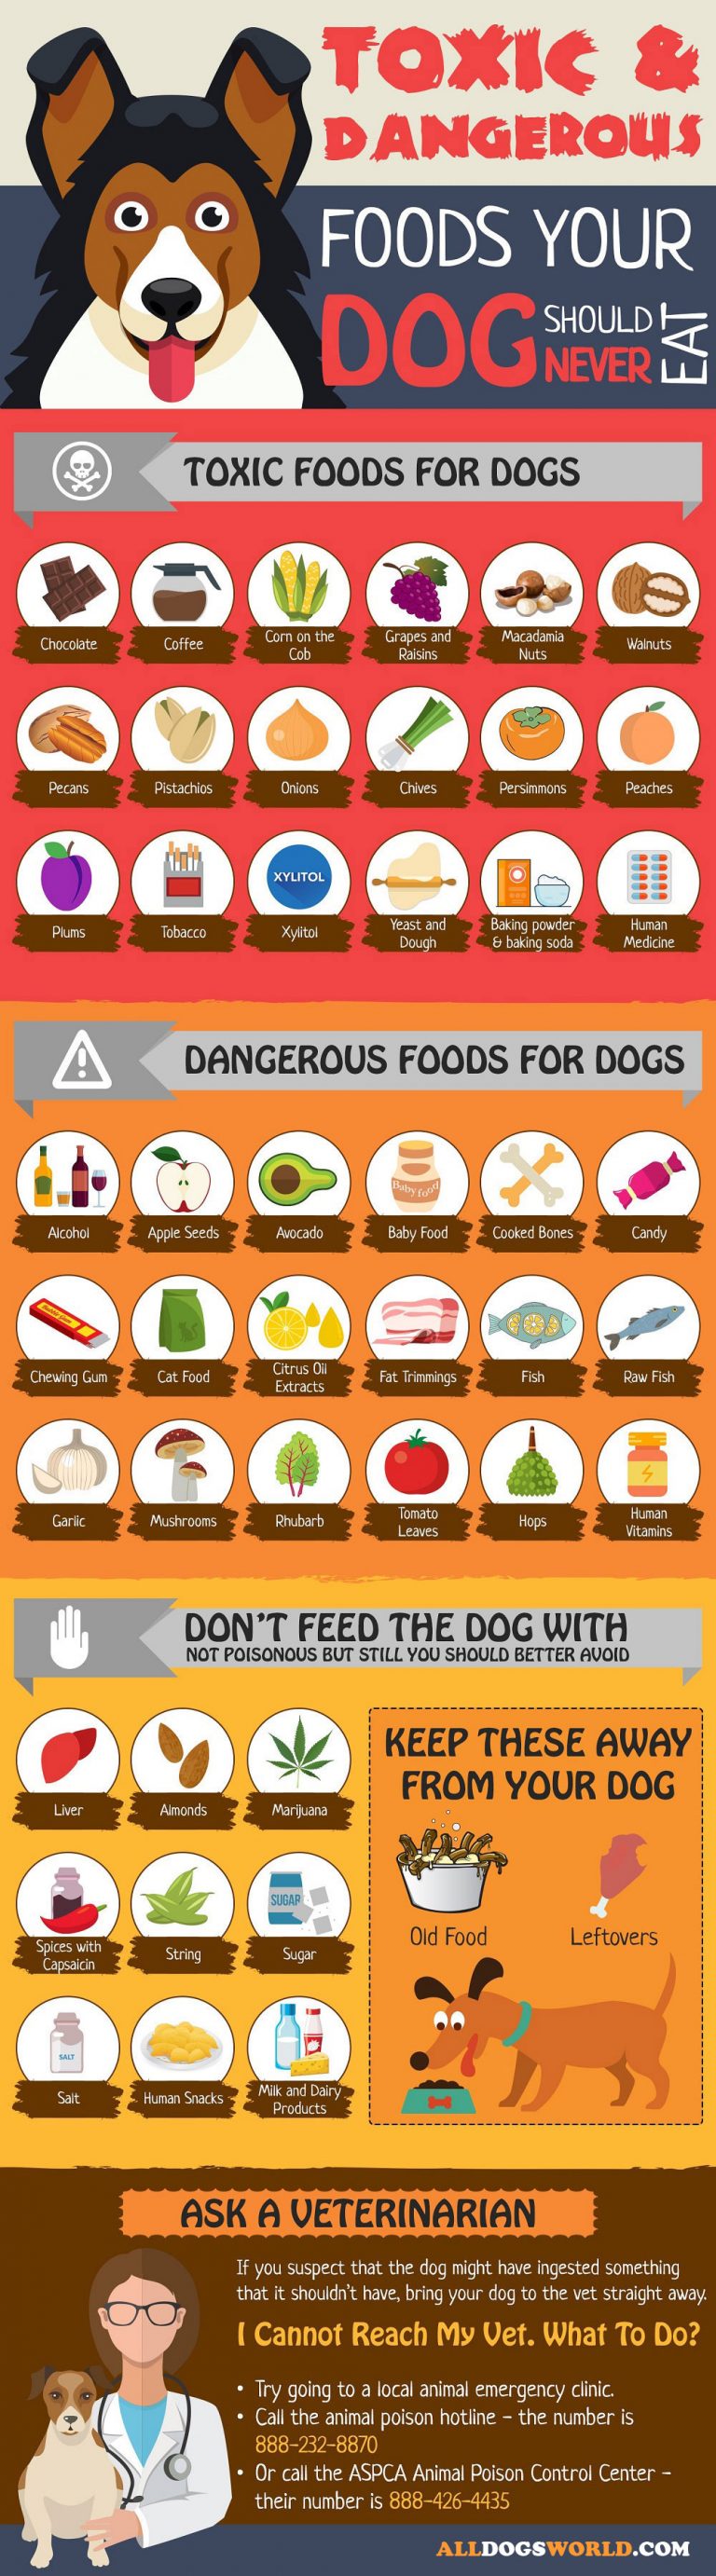 Toxic Foods for Dogs List: Dangerous foods for dogs | alldogsworld.com